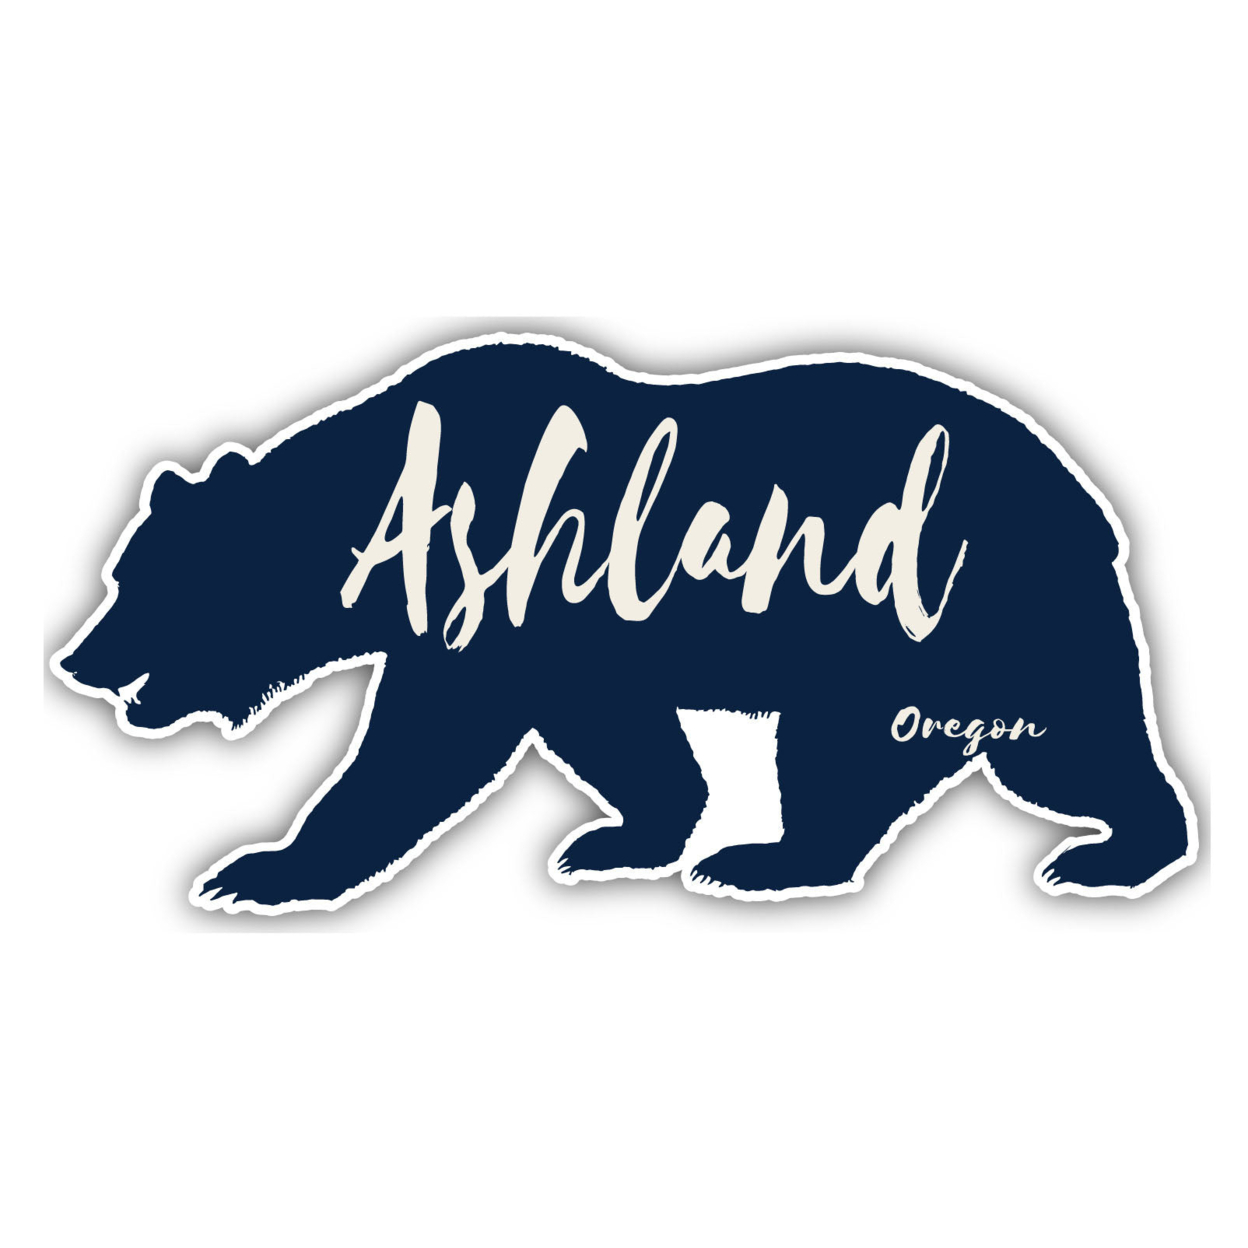 Ashland Oregon Souvenir Decorative Stickers (Choose Theme And Size) - Single Unit, 12-Inch, Bear